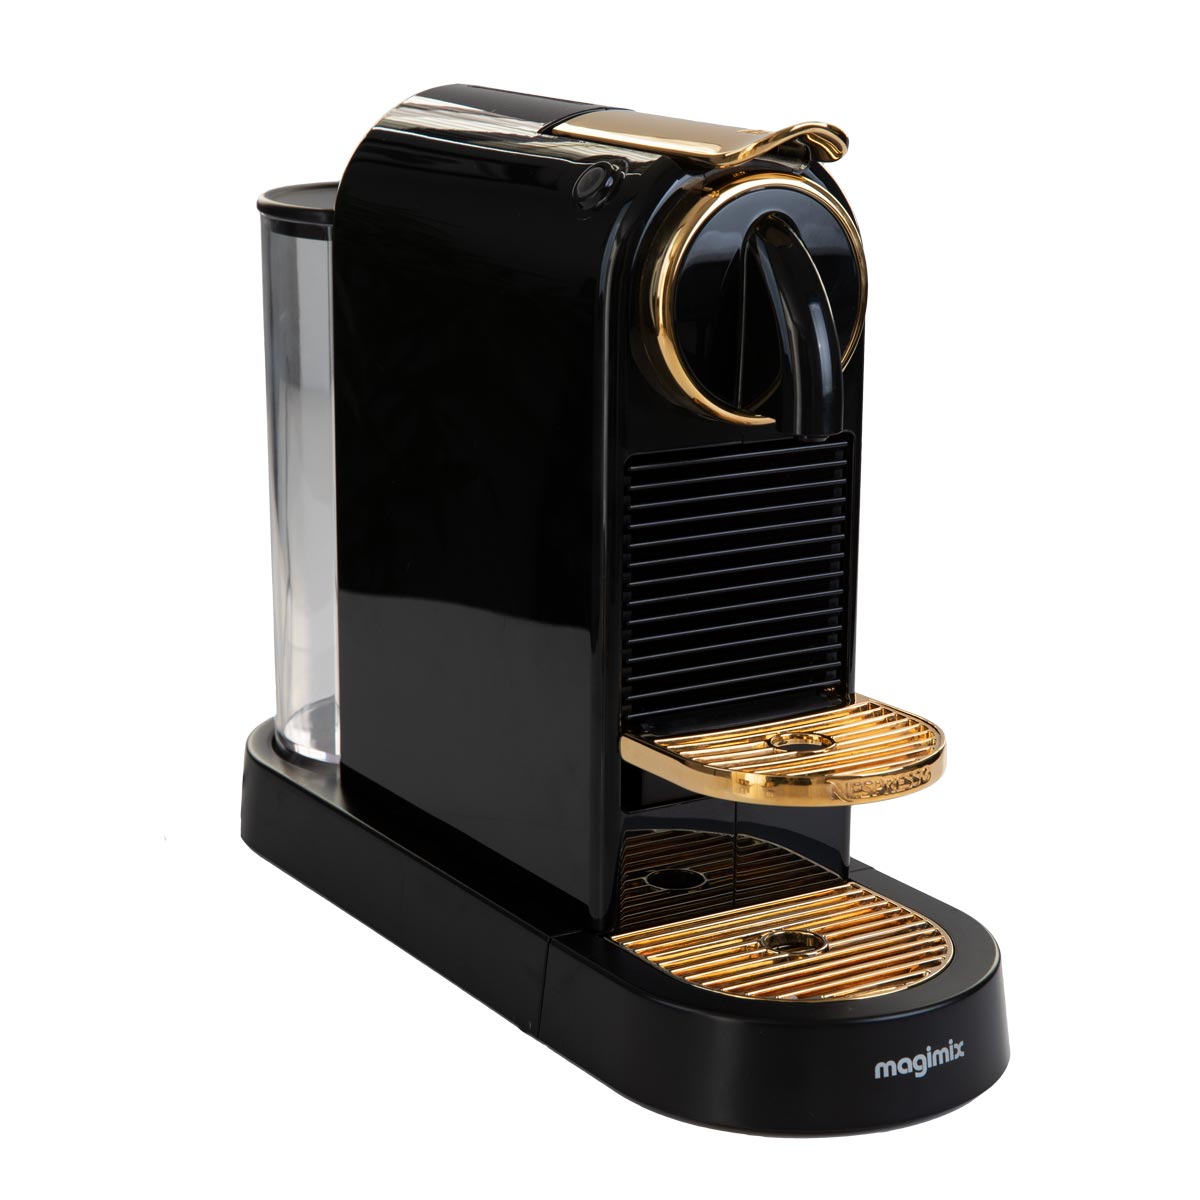 Luxury Nespresso Coffee Machine - Elite Luxury Gold Plating